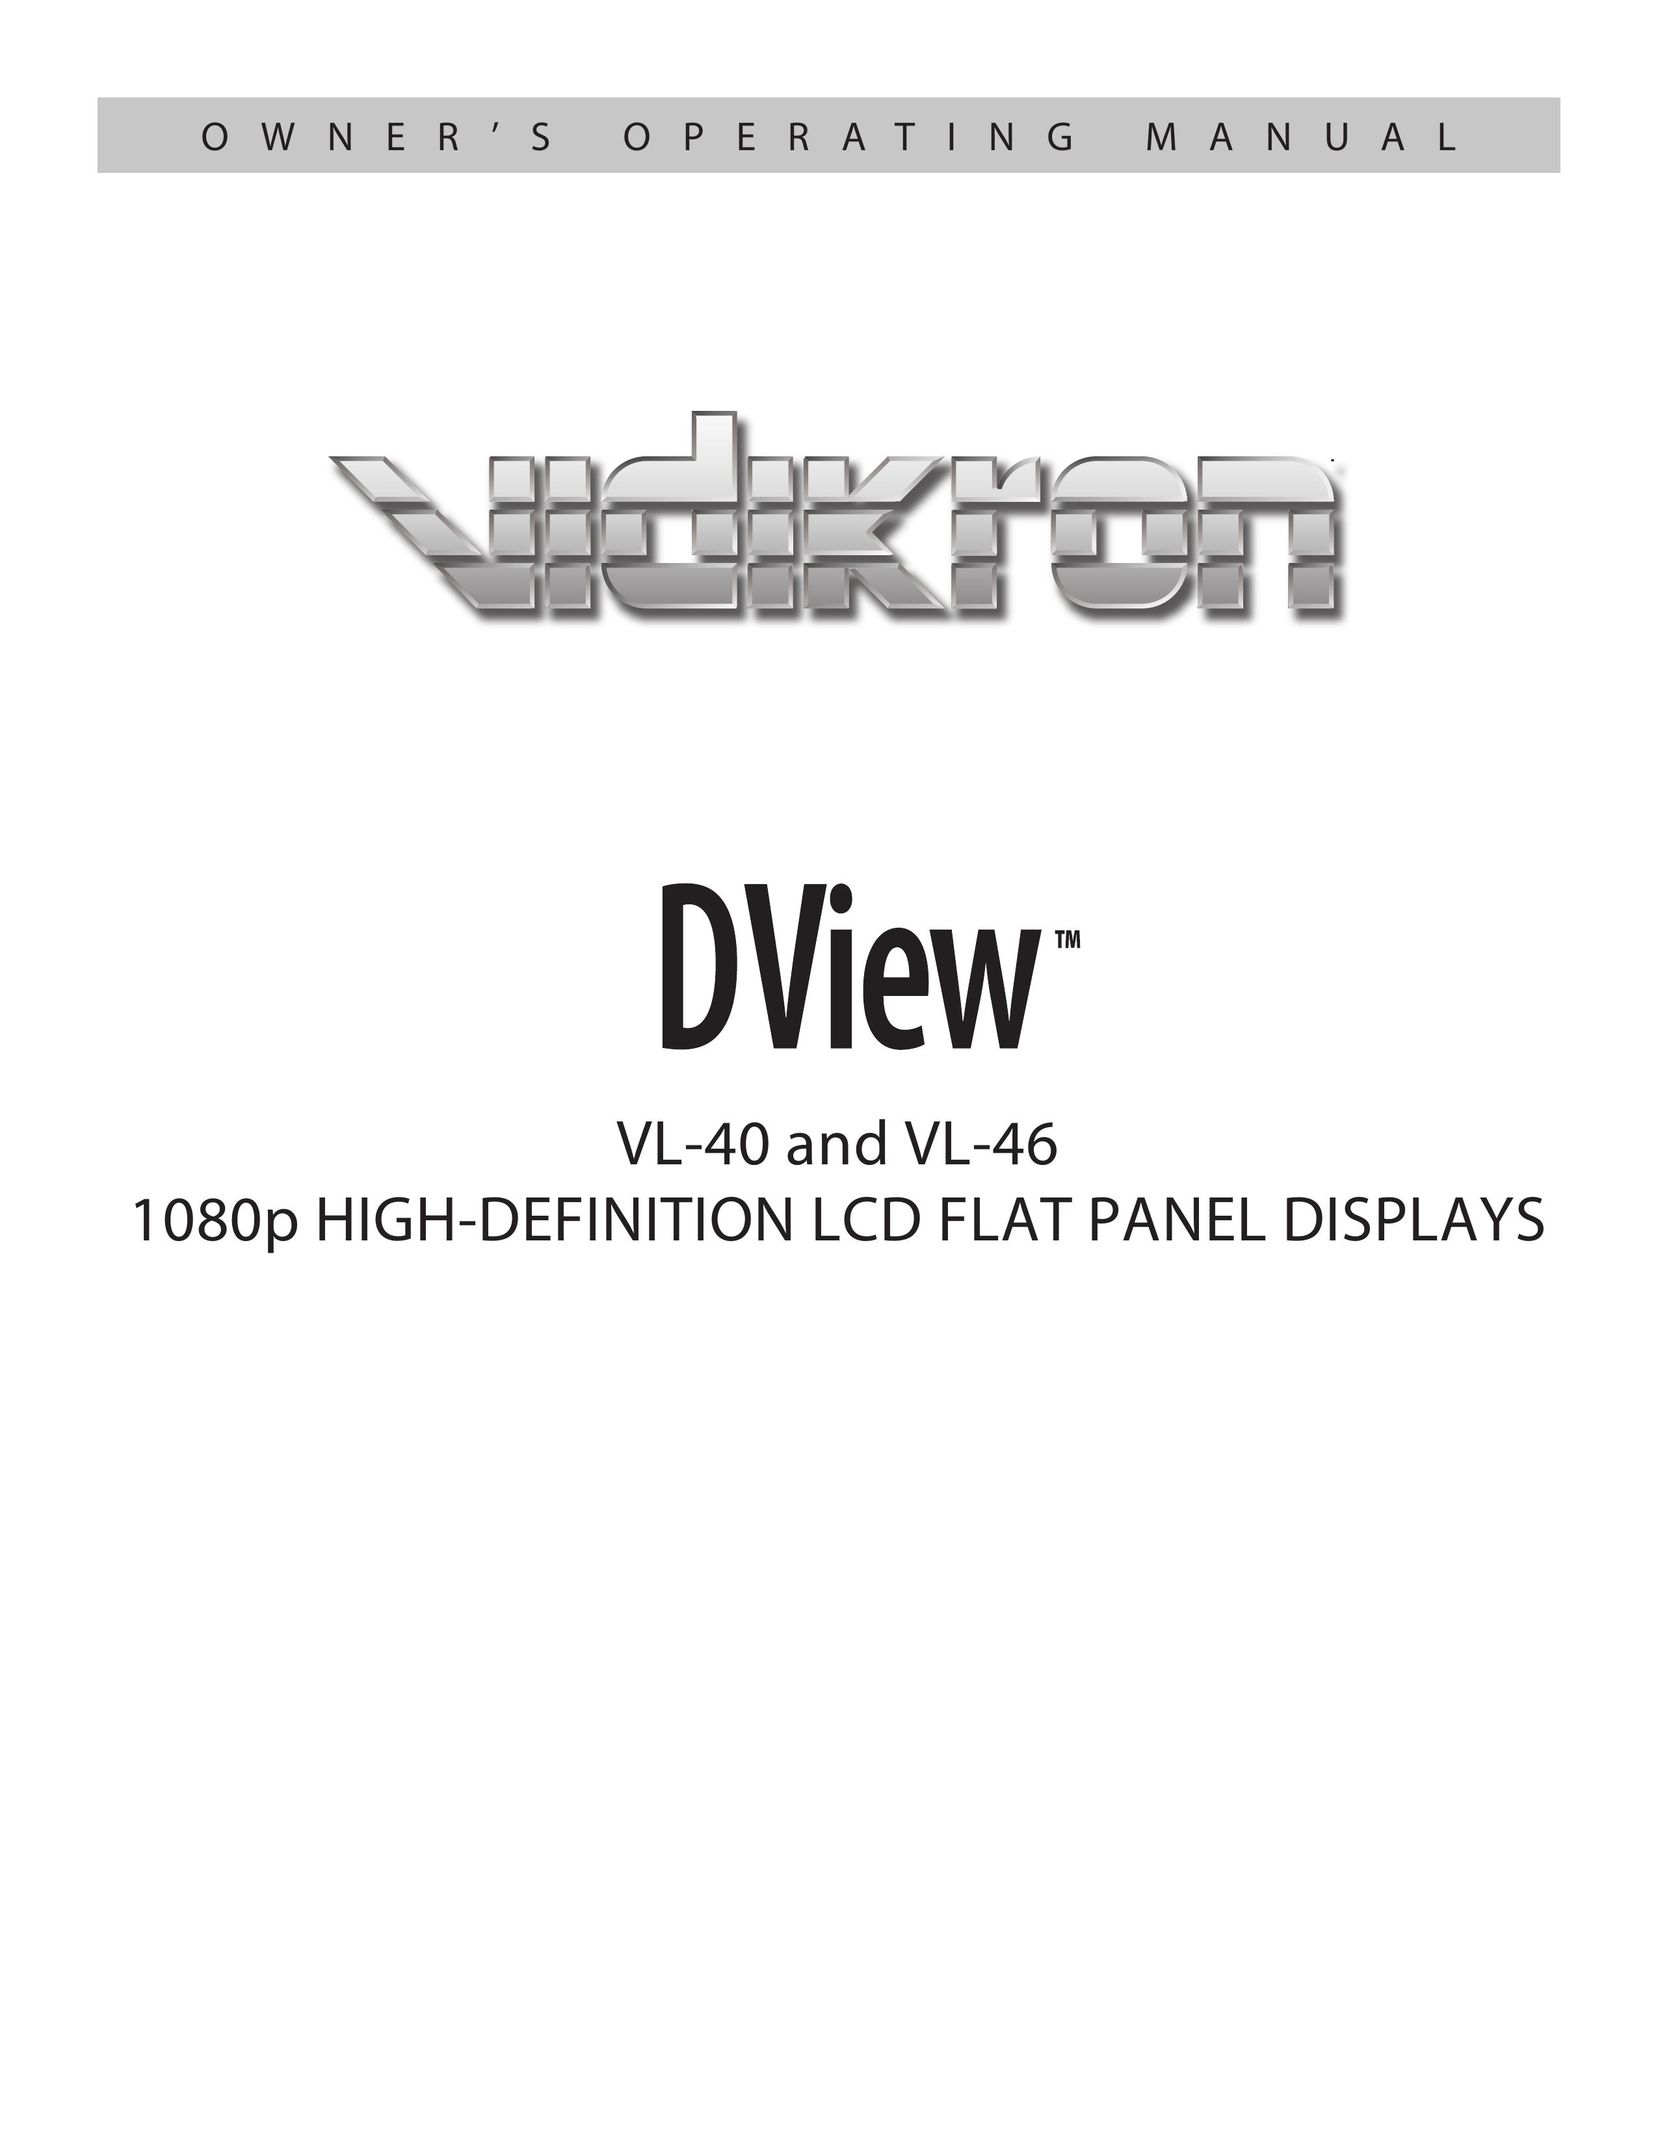 Runco VL-40 Flat Panel Television User Manual